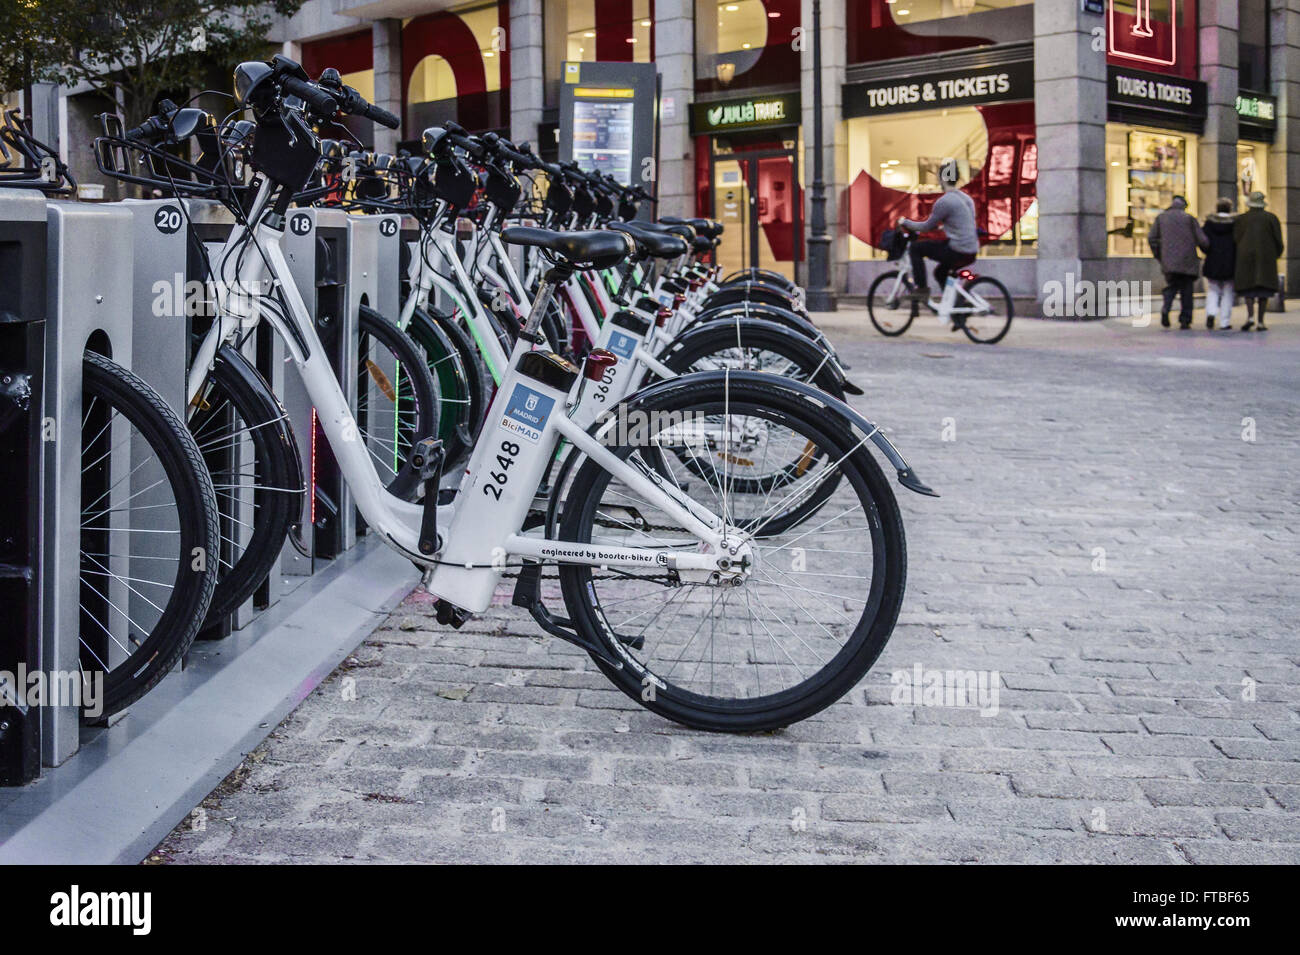 Alquilar bicicletas fotografías e imágenes de alta resolución - Alamy